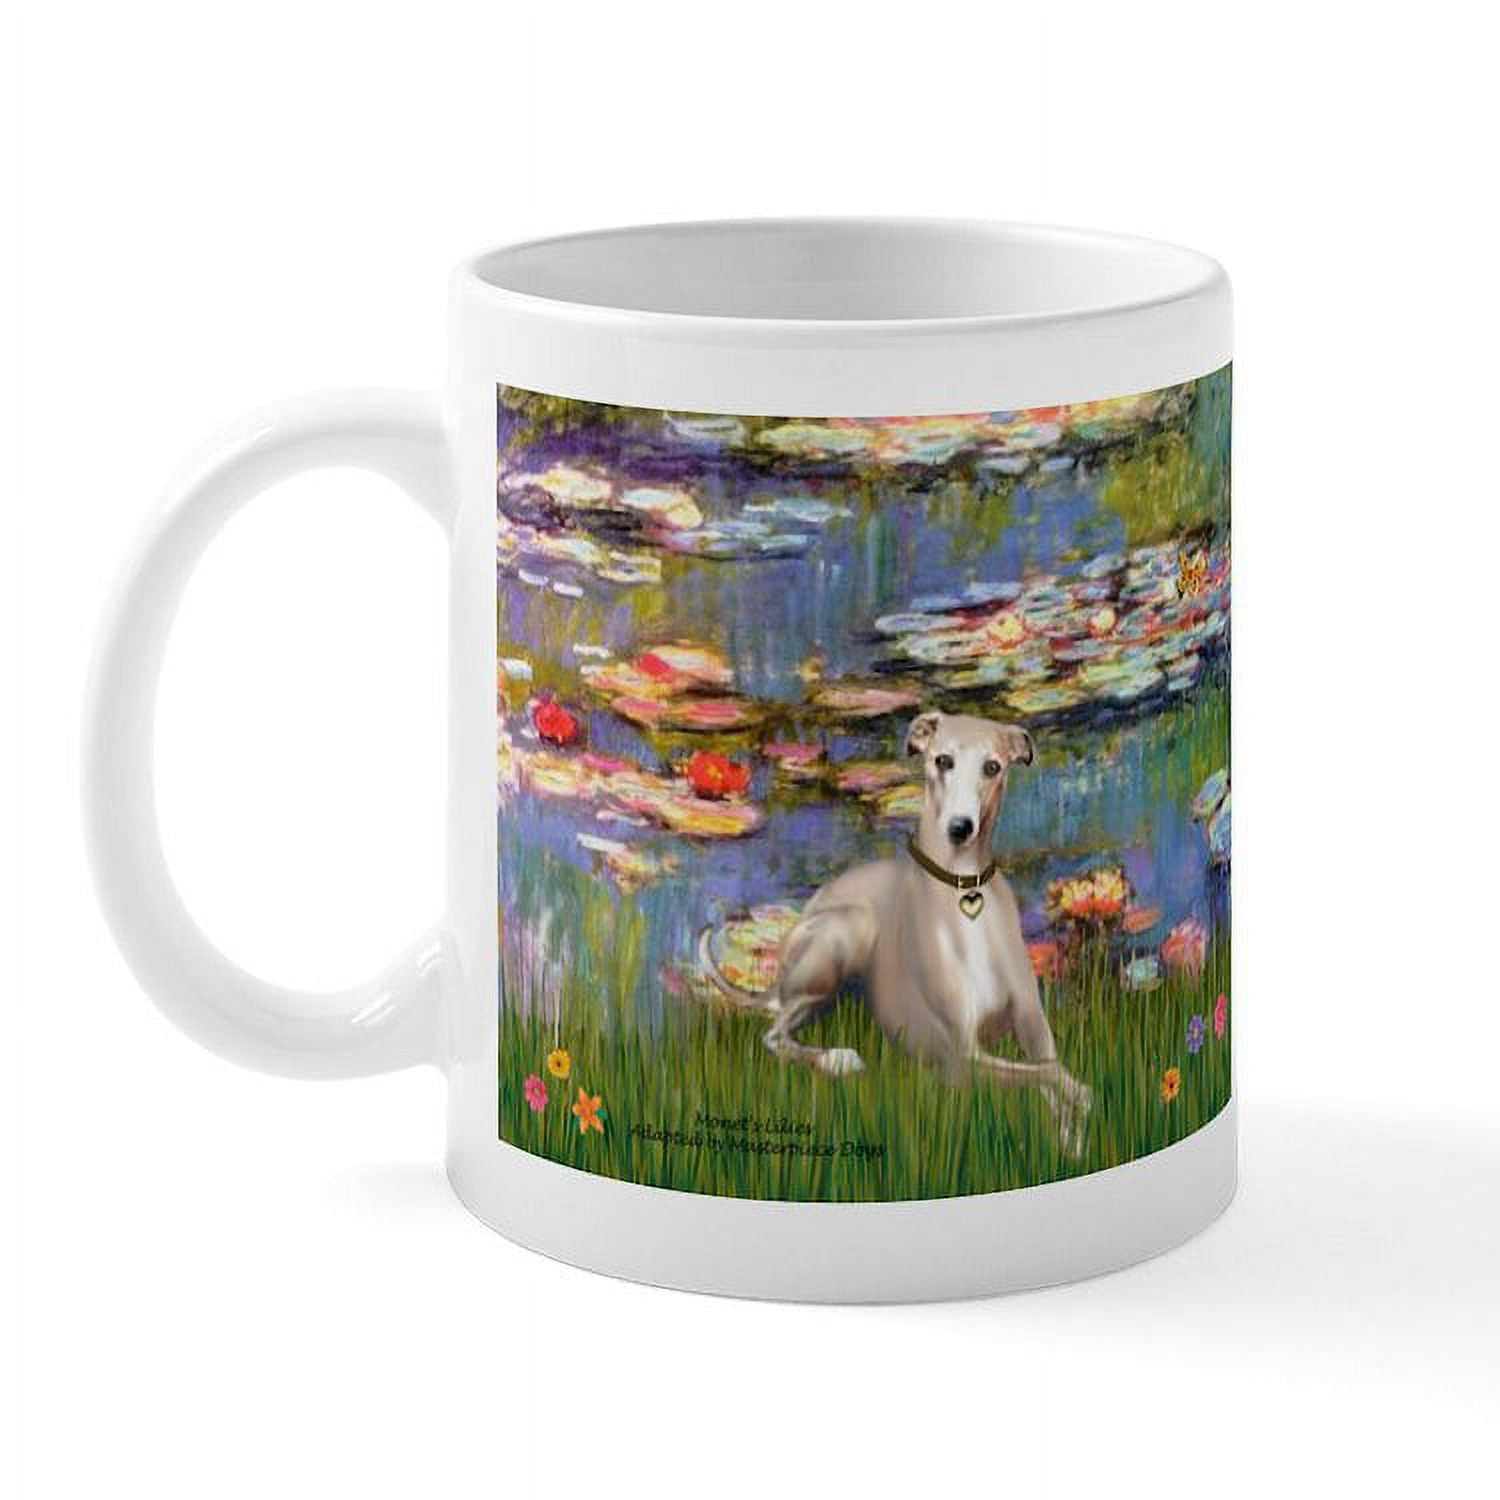 CafePress - My Little Pony Rainbow Dash Flowers Mugs - 11 oz Ceramic Mug -  Novelty Coffee Tea Cup 